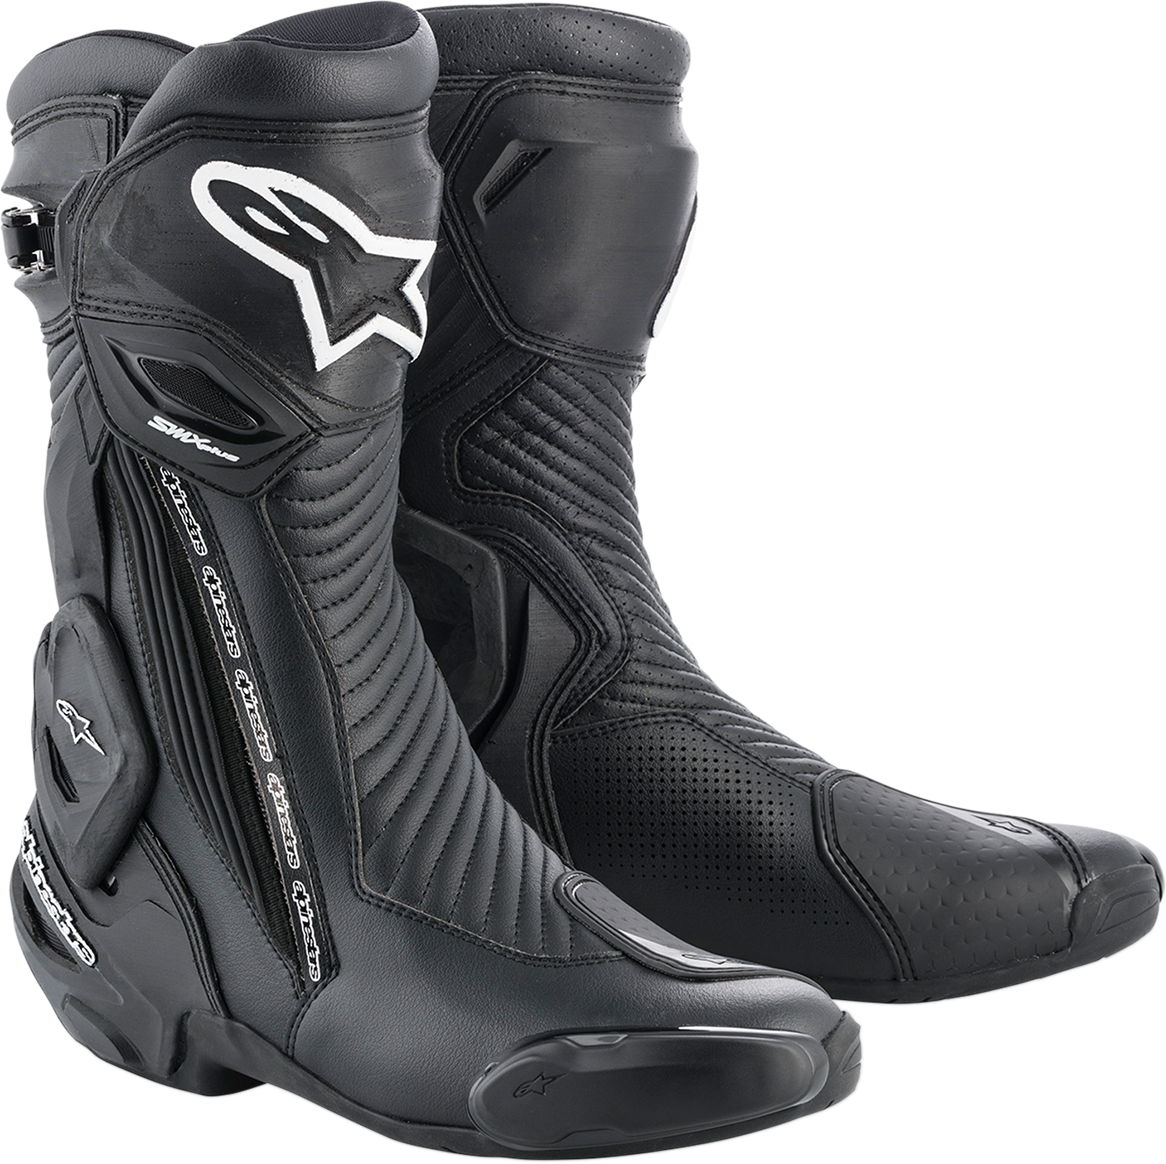 ALPINESTARS SMX+ Boots - Black - US 6 / EU 39 2221019-10-39